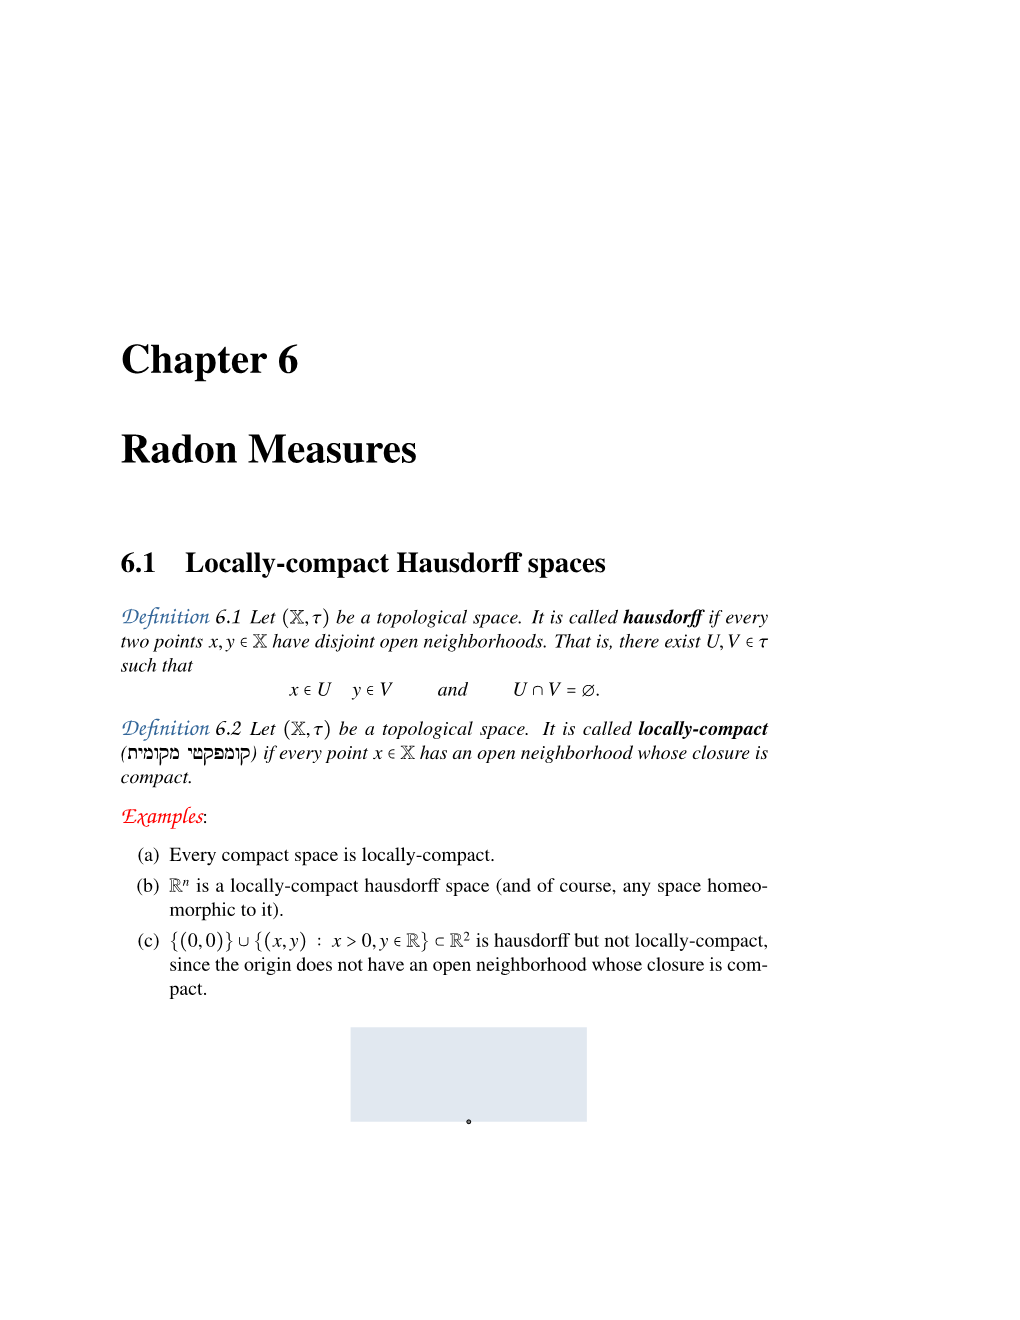 Chapter 6 Radon Measures